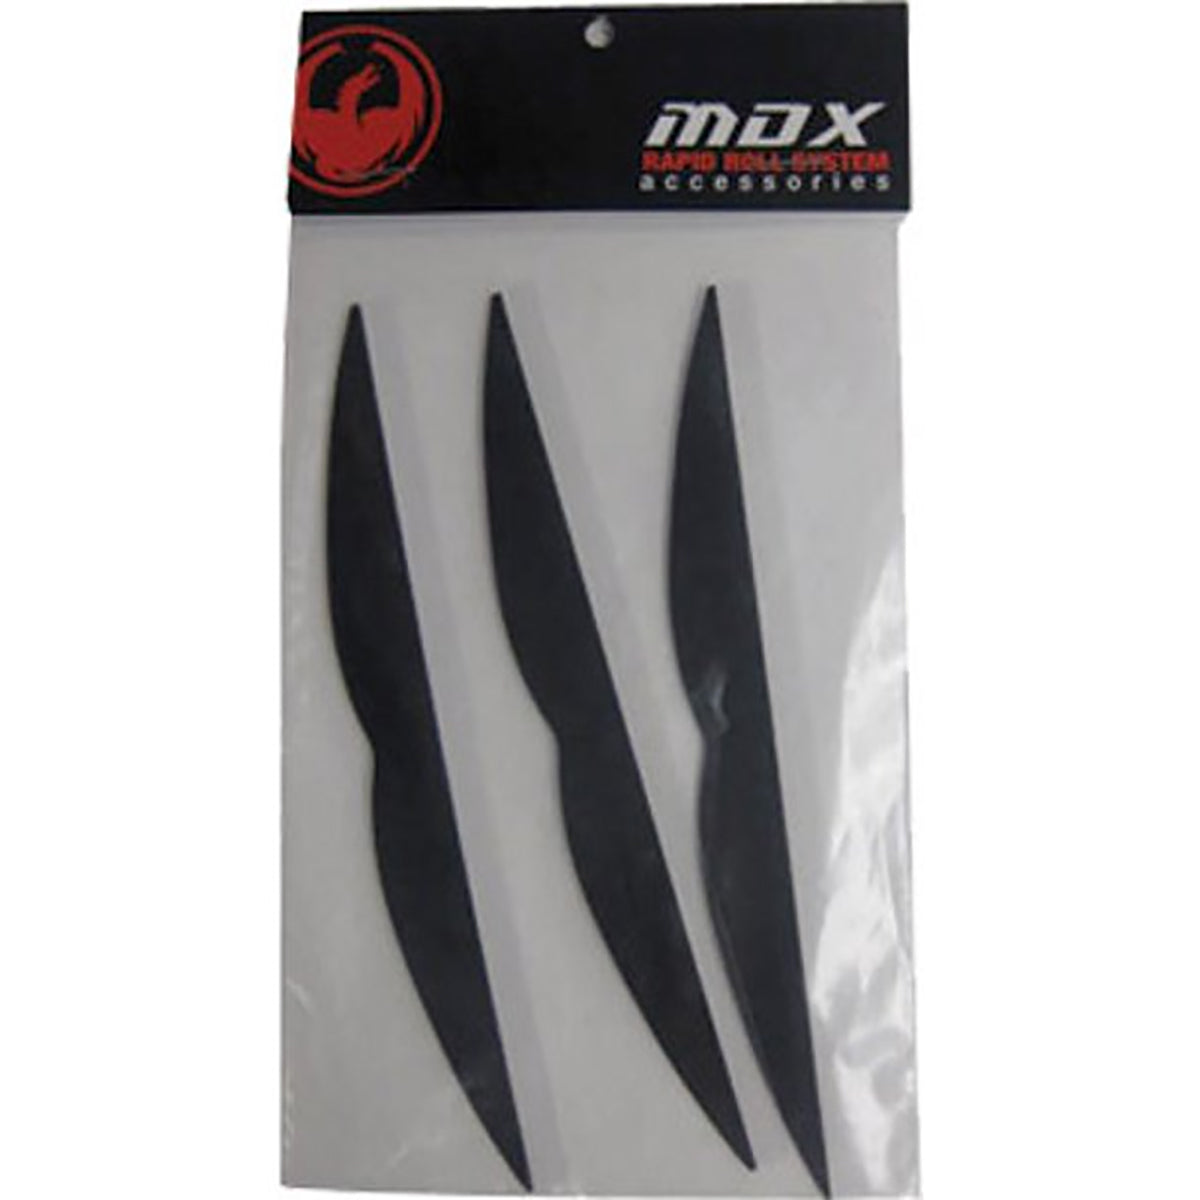 Dragon Alliance MDX Rapid Roll Mud Visor Flap 3 Pack Goggle Accessories-722-118